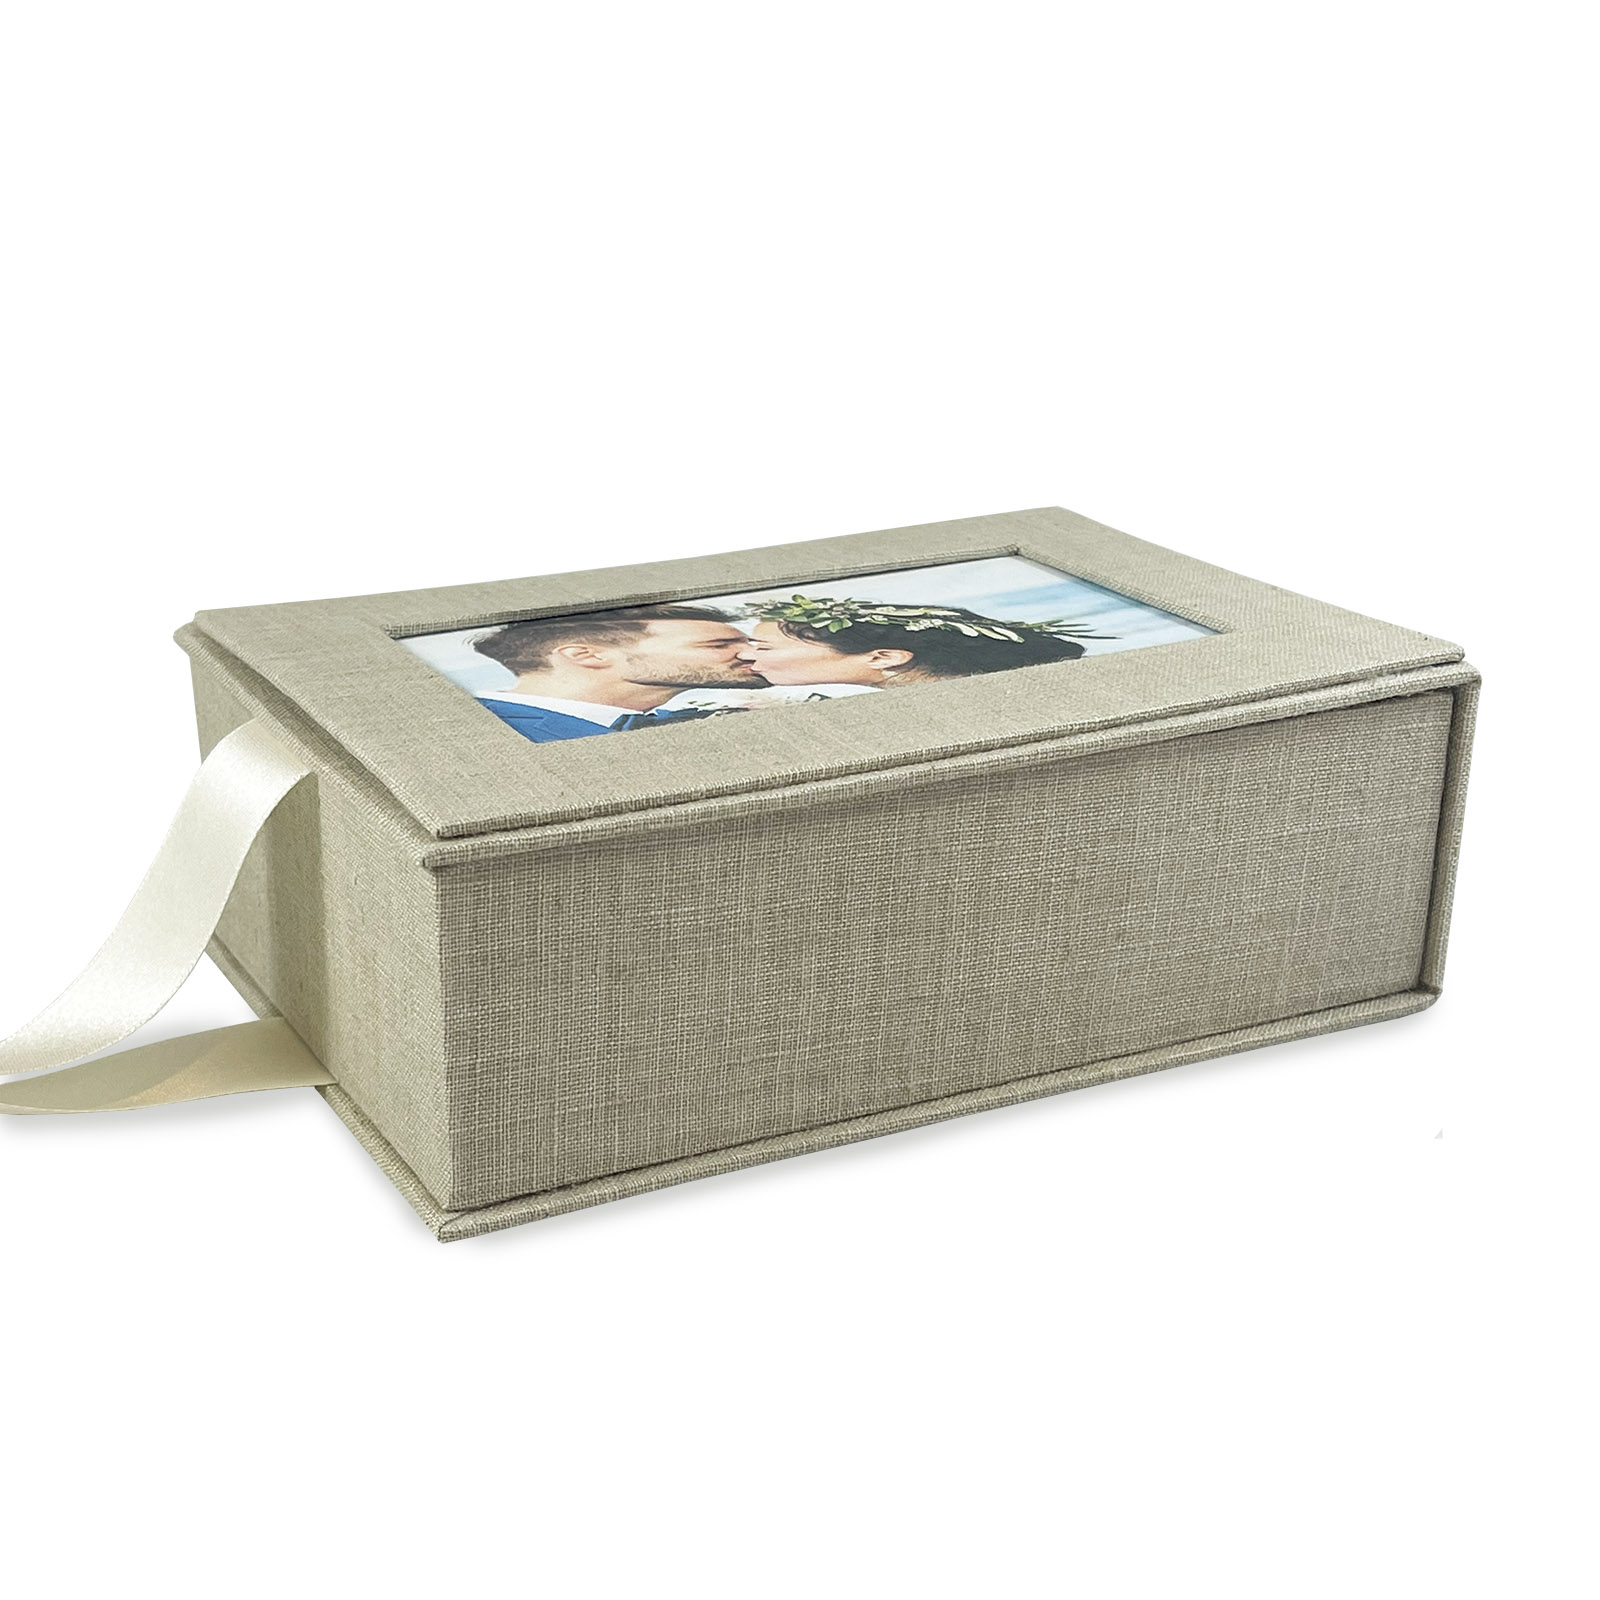 Rustic linen cloth photo box for 4x6 photos